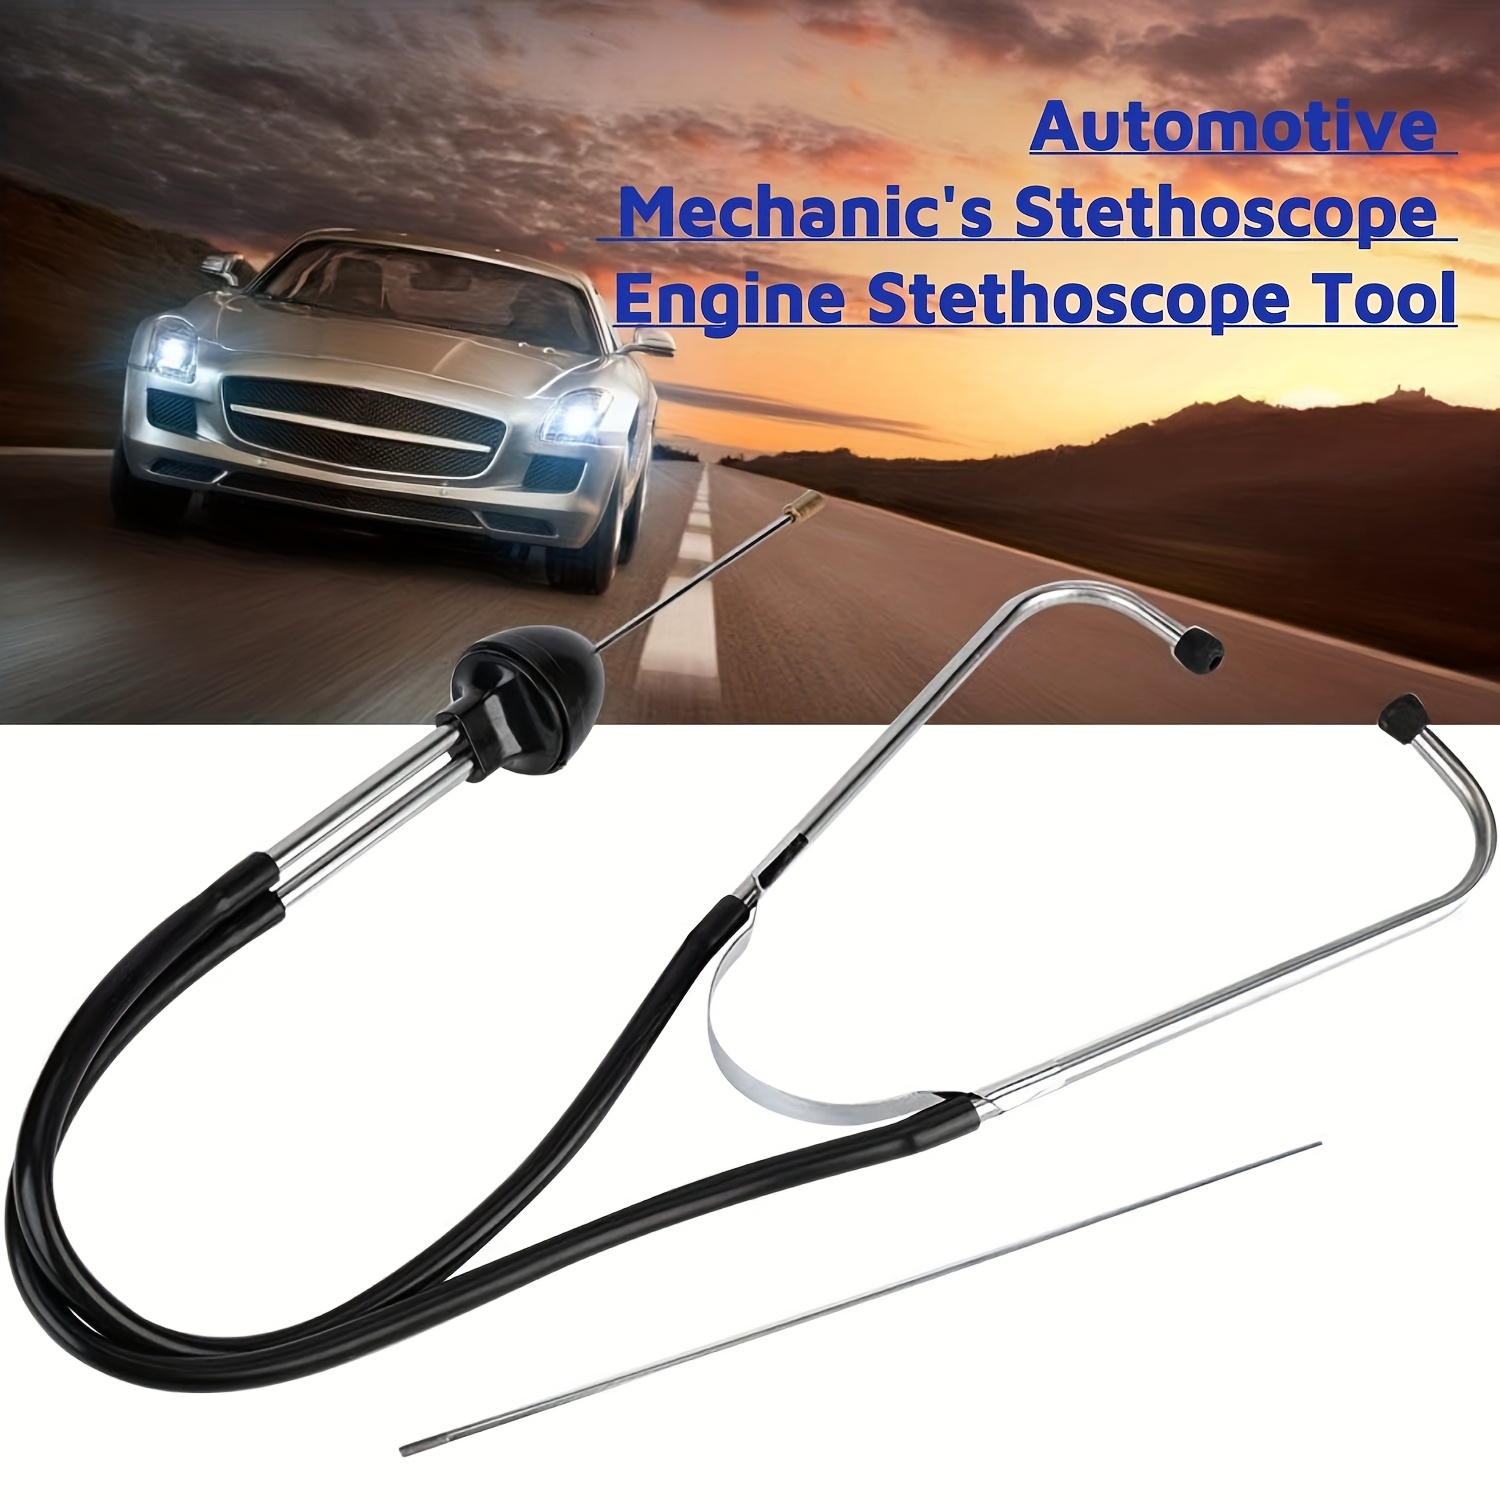 Motor Stethoscope